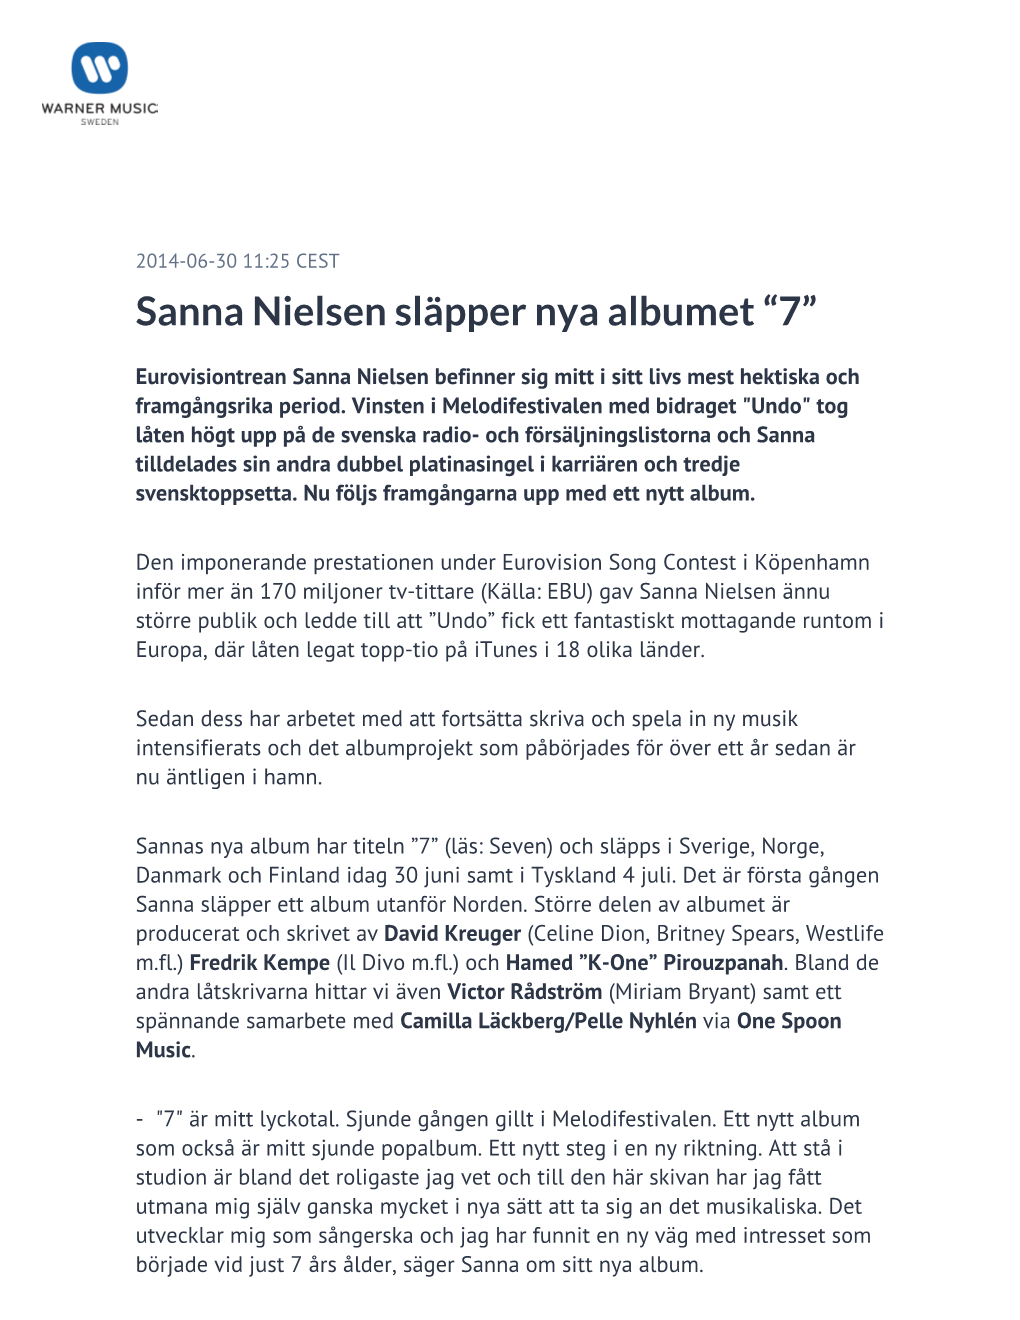 Sanna Nielsen Släpper Nya Albumet “7”